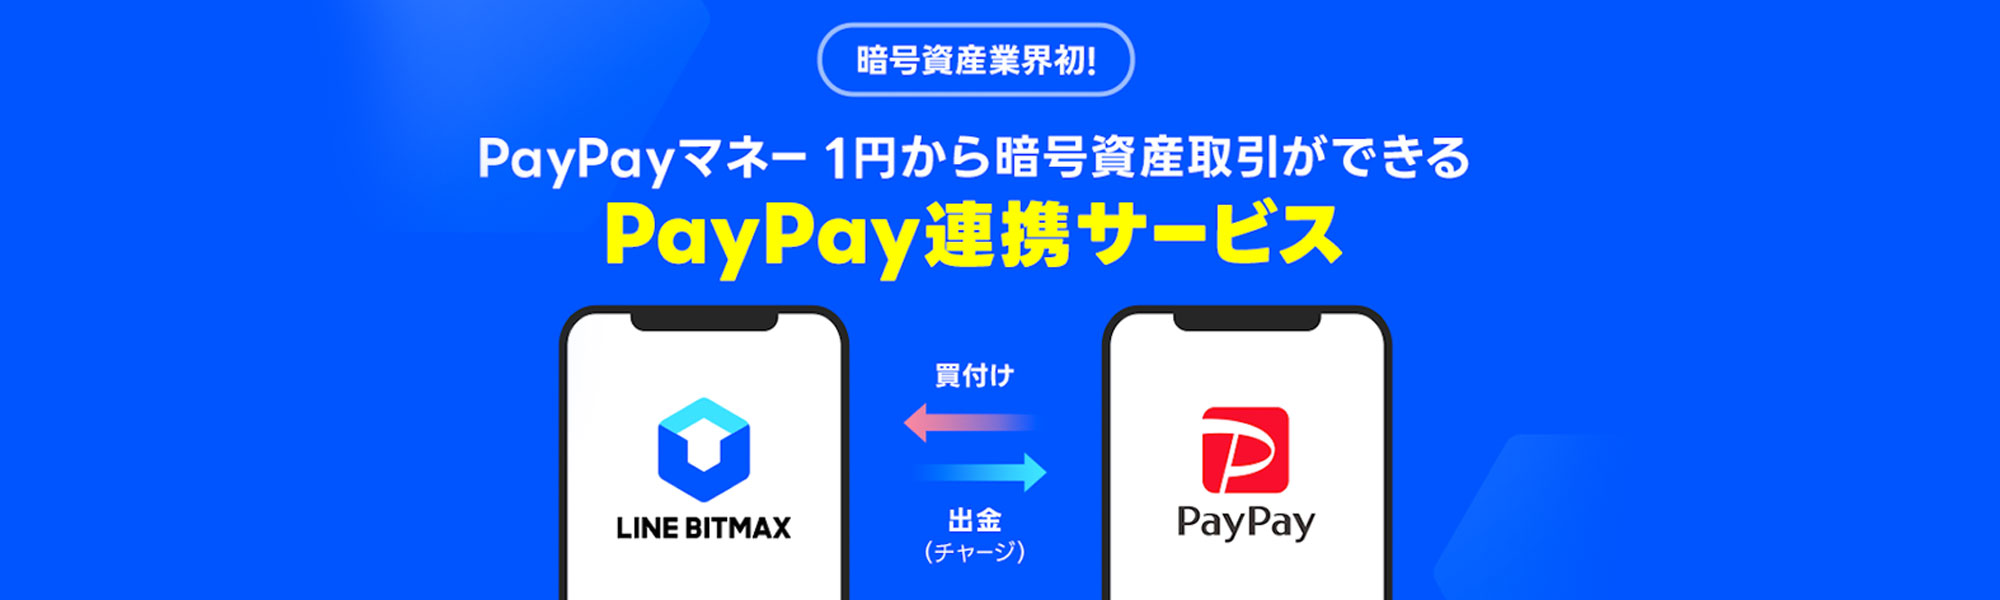 LINE BITMAXがPayPayマネーで暗号資産の購入やPayPayマネーへの出金ができる「PayPay連携サービス」を開始